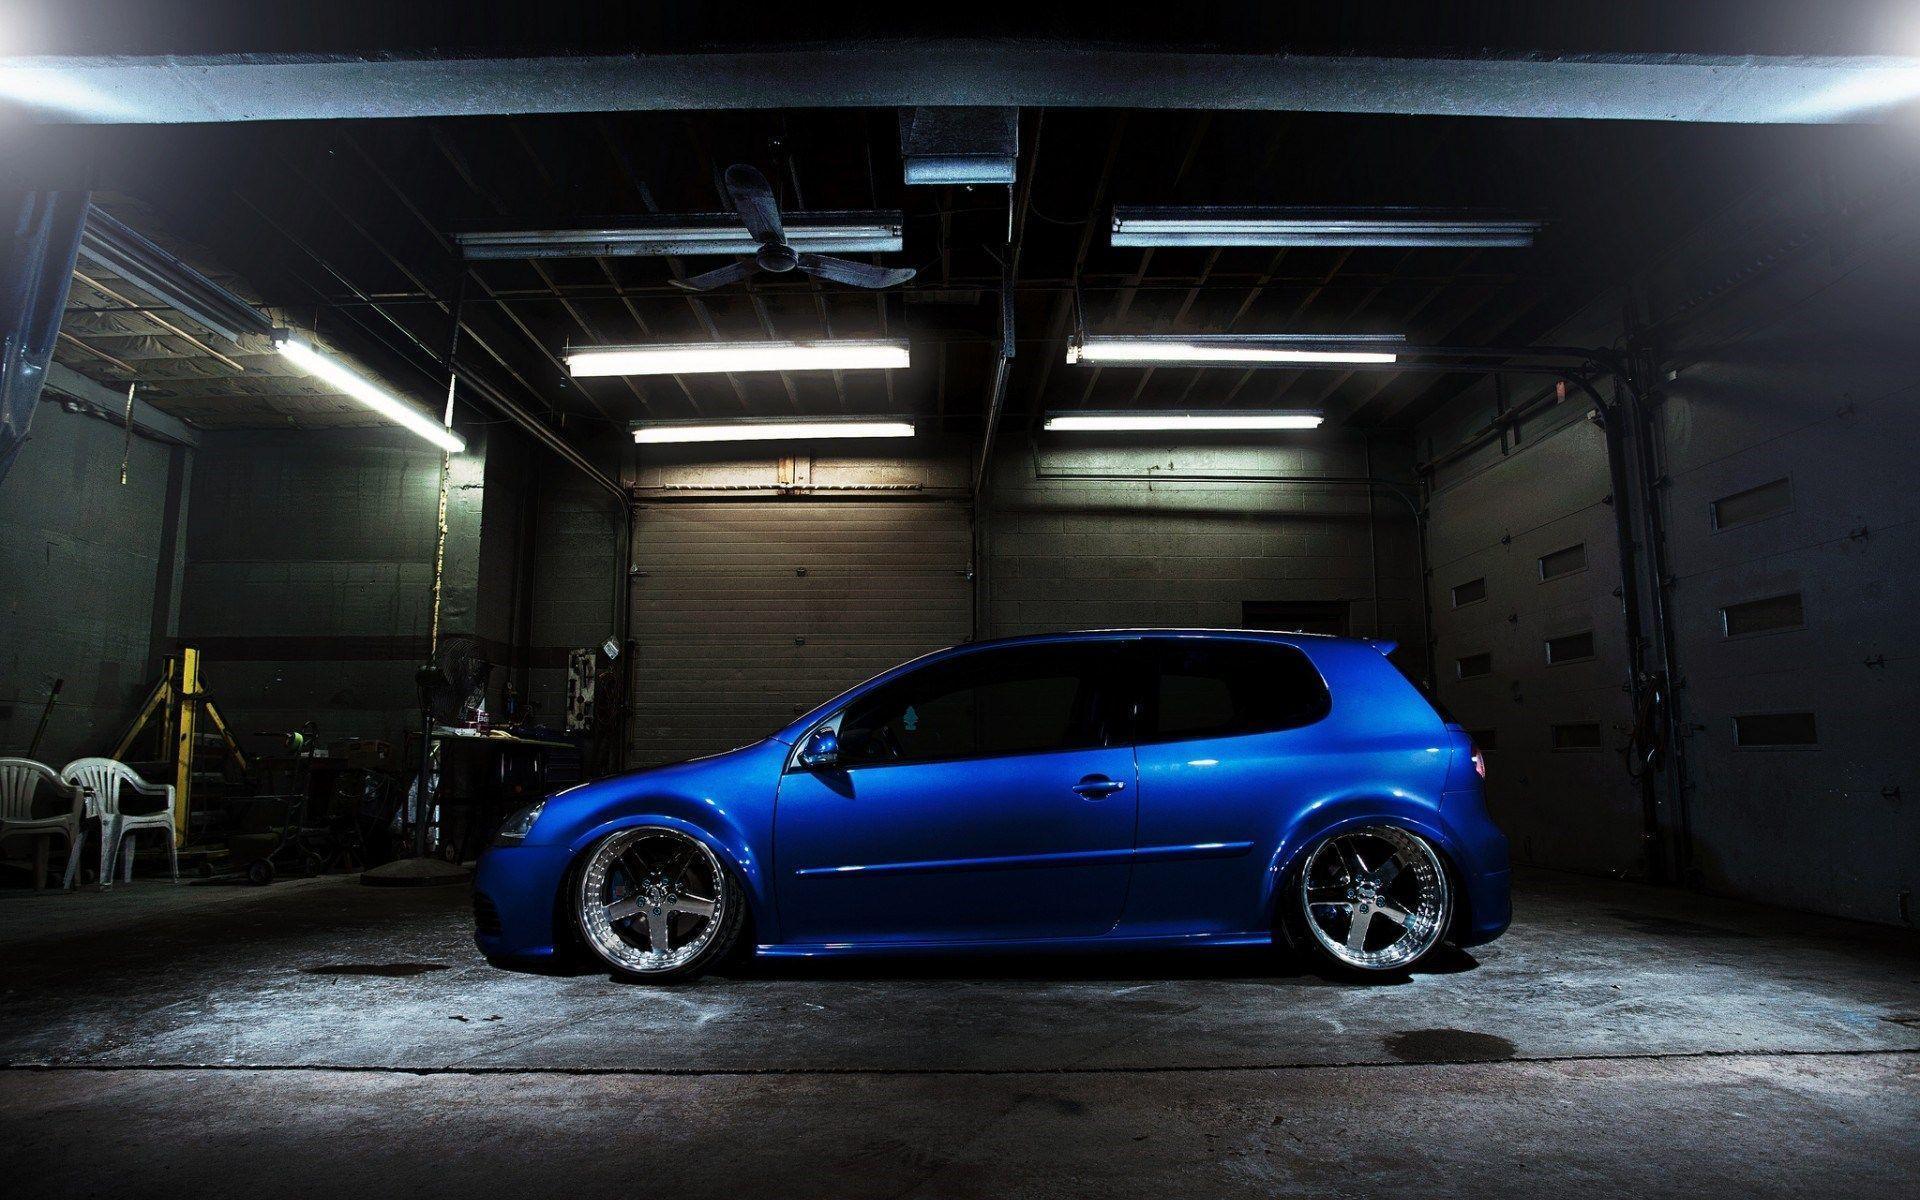 Fantastic Blue Volkswagen GTI Wallpaper 42980 1920x1200 px